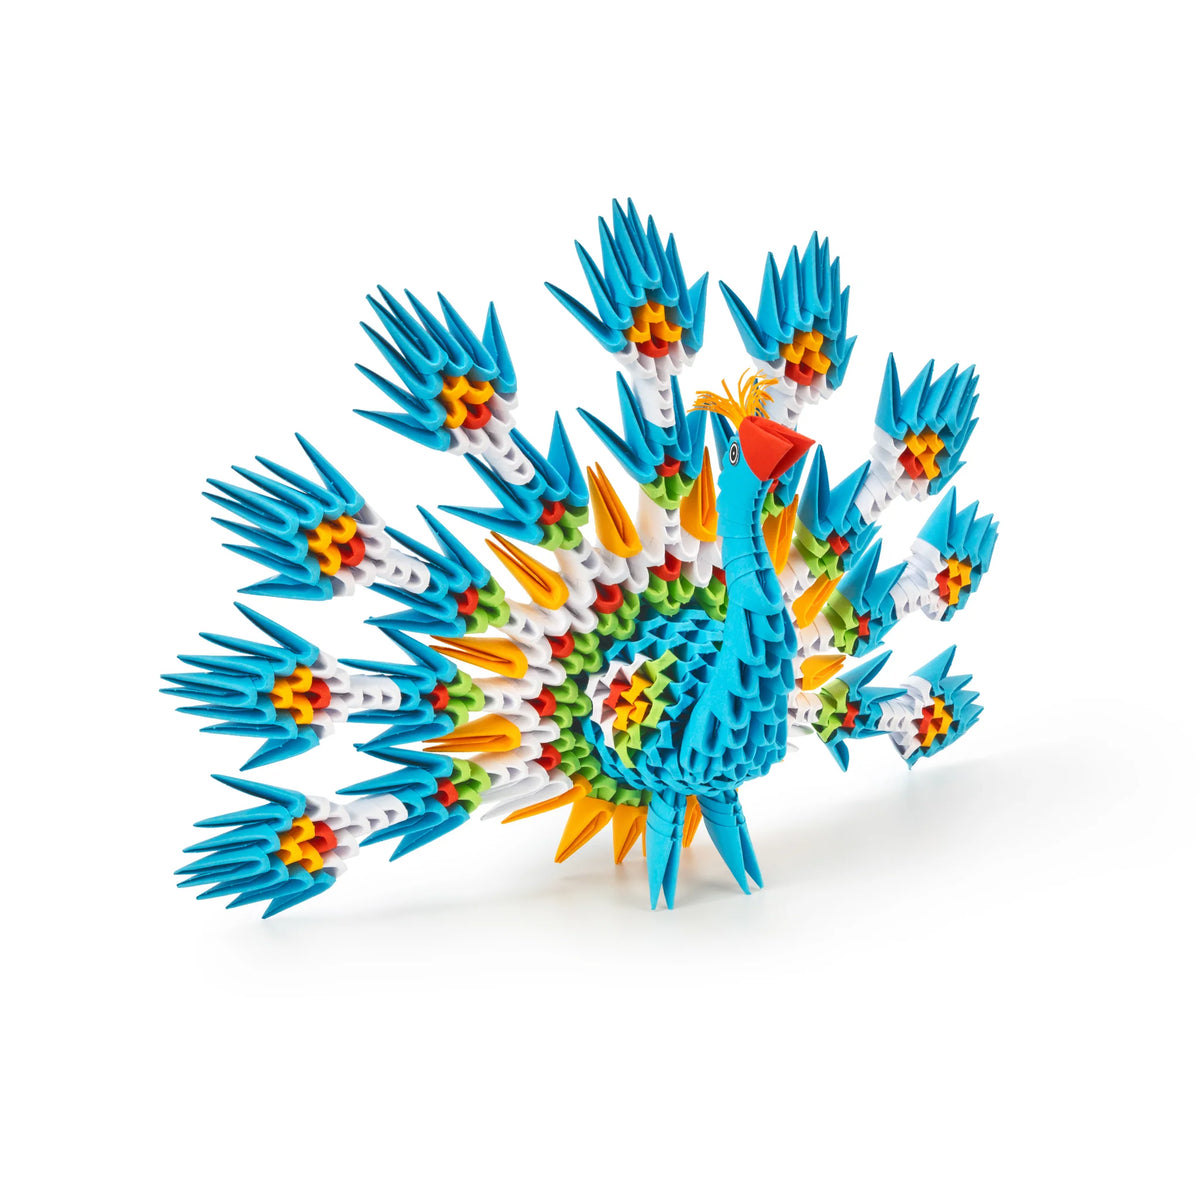 Alexander Origami 3D Peacock